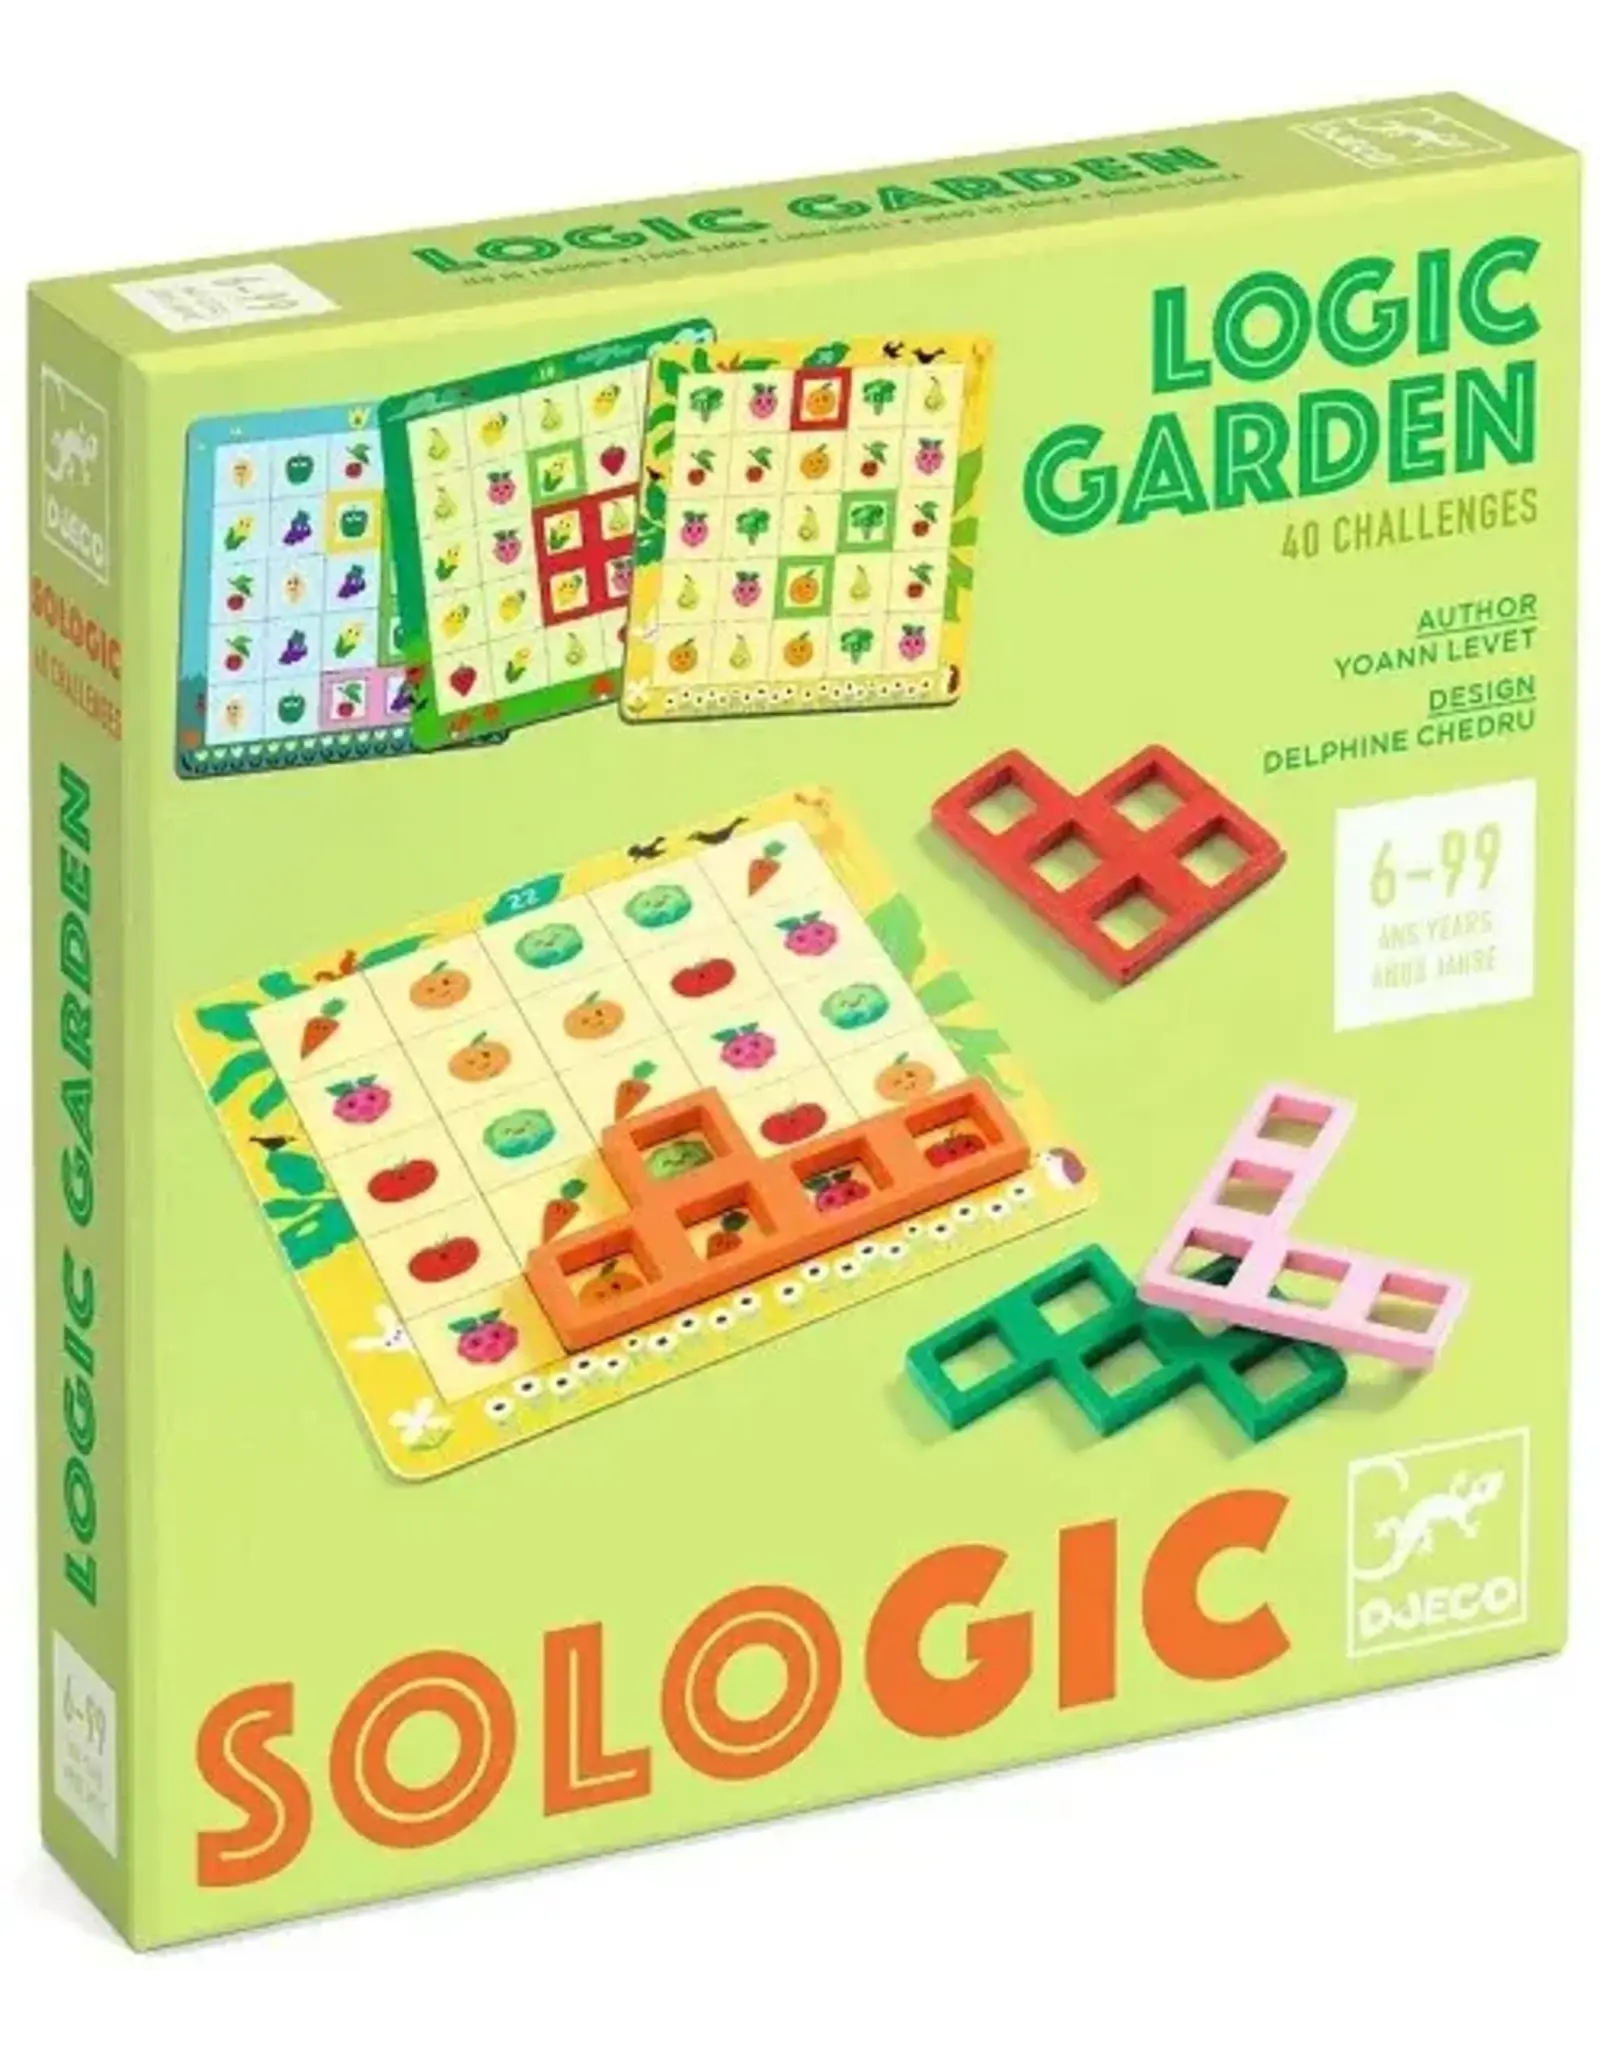 Djeco Sologic Logic Garden